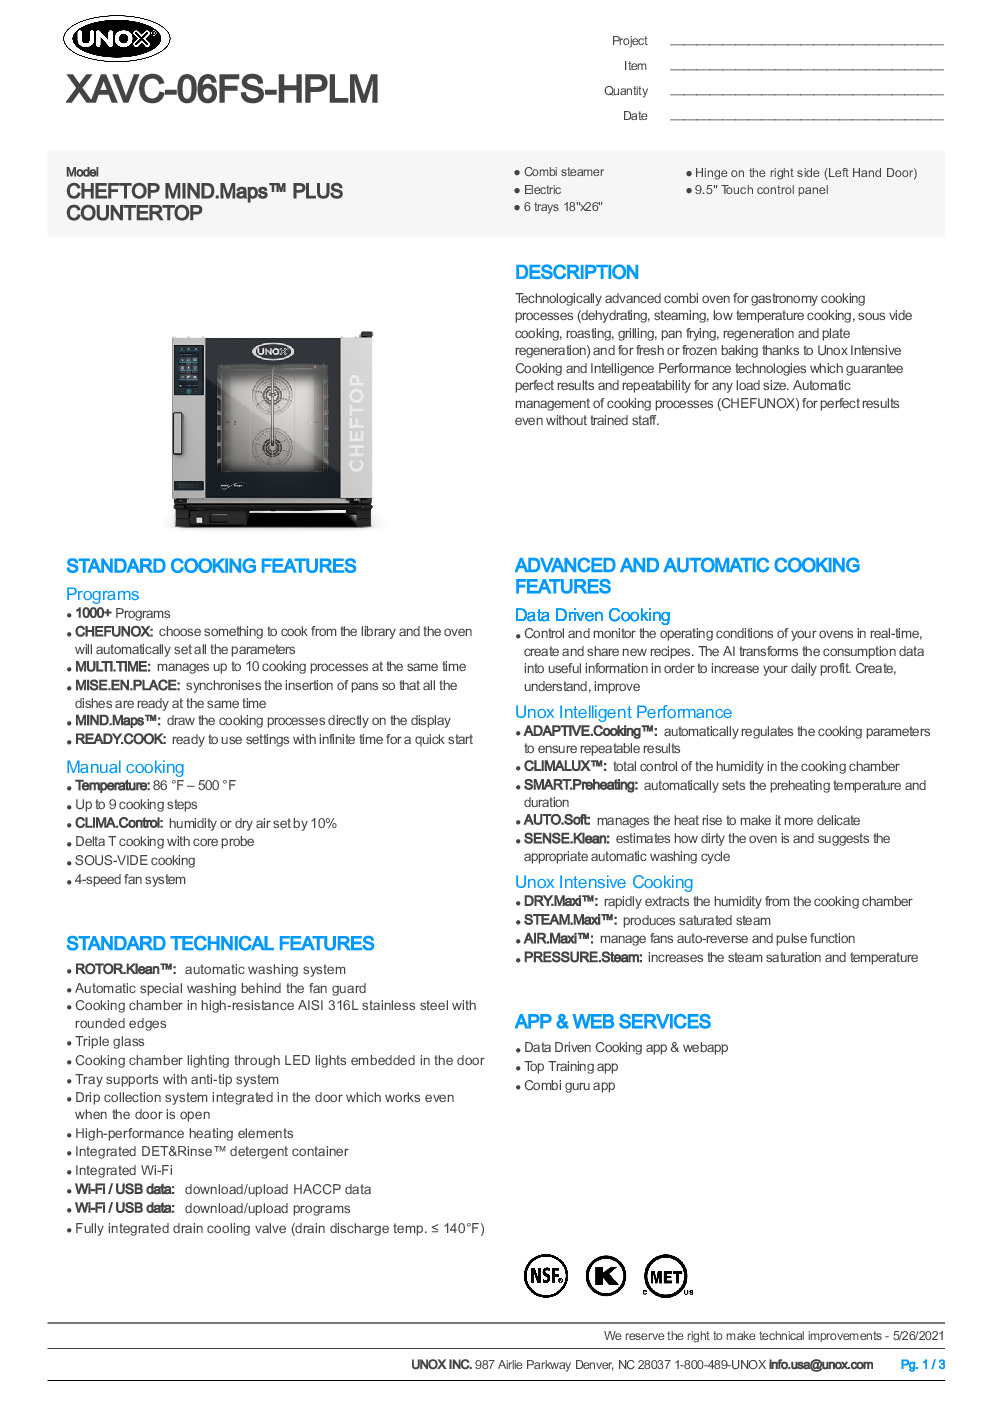 UNOX XAVC-06FS-HPLM Electric Combi Oven